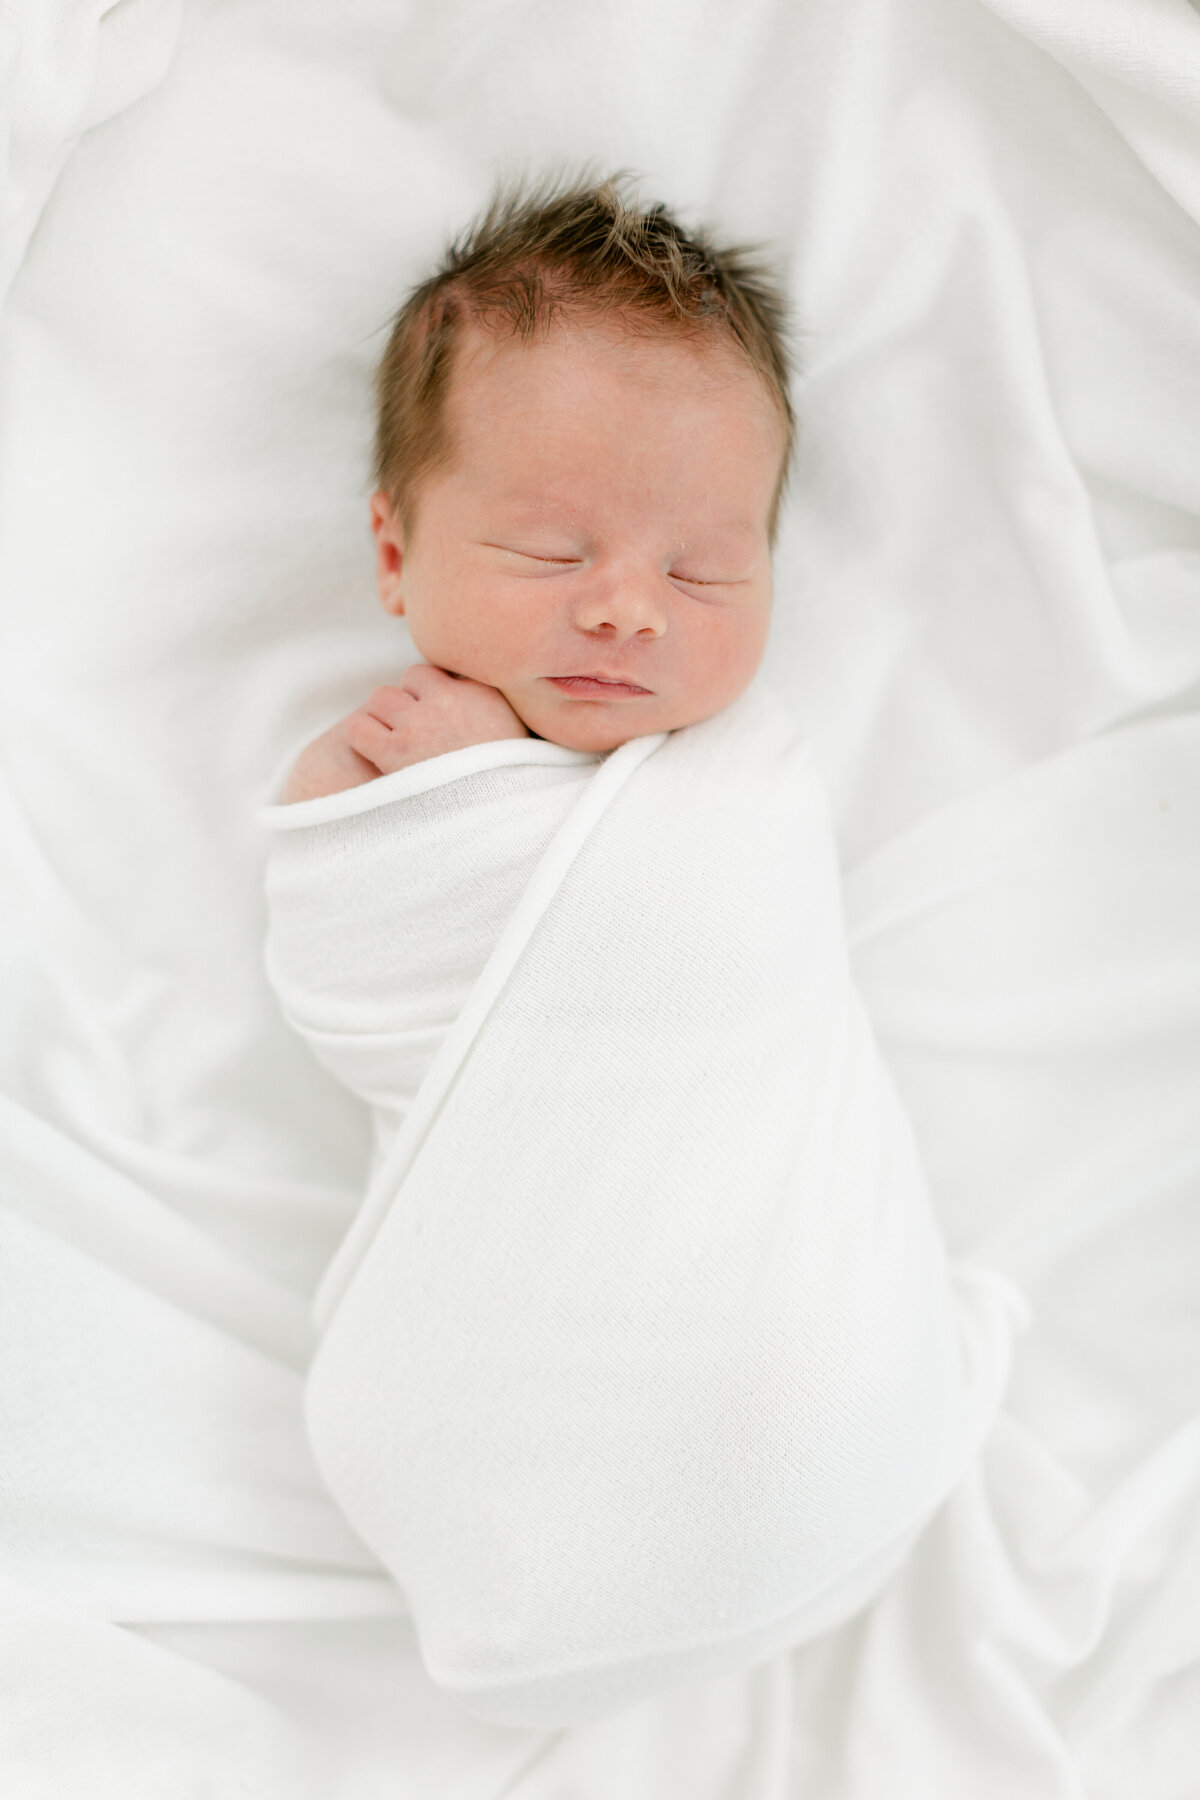 infant baby boy swaddled in a white blanket naturally posed by Philadelphia Newborn Photographer Tara Federico